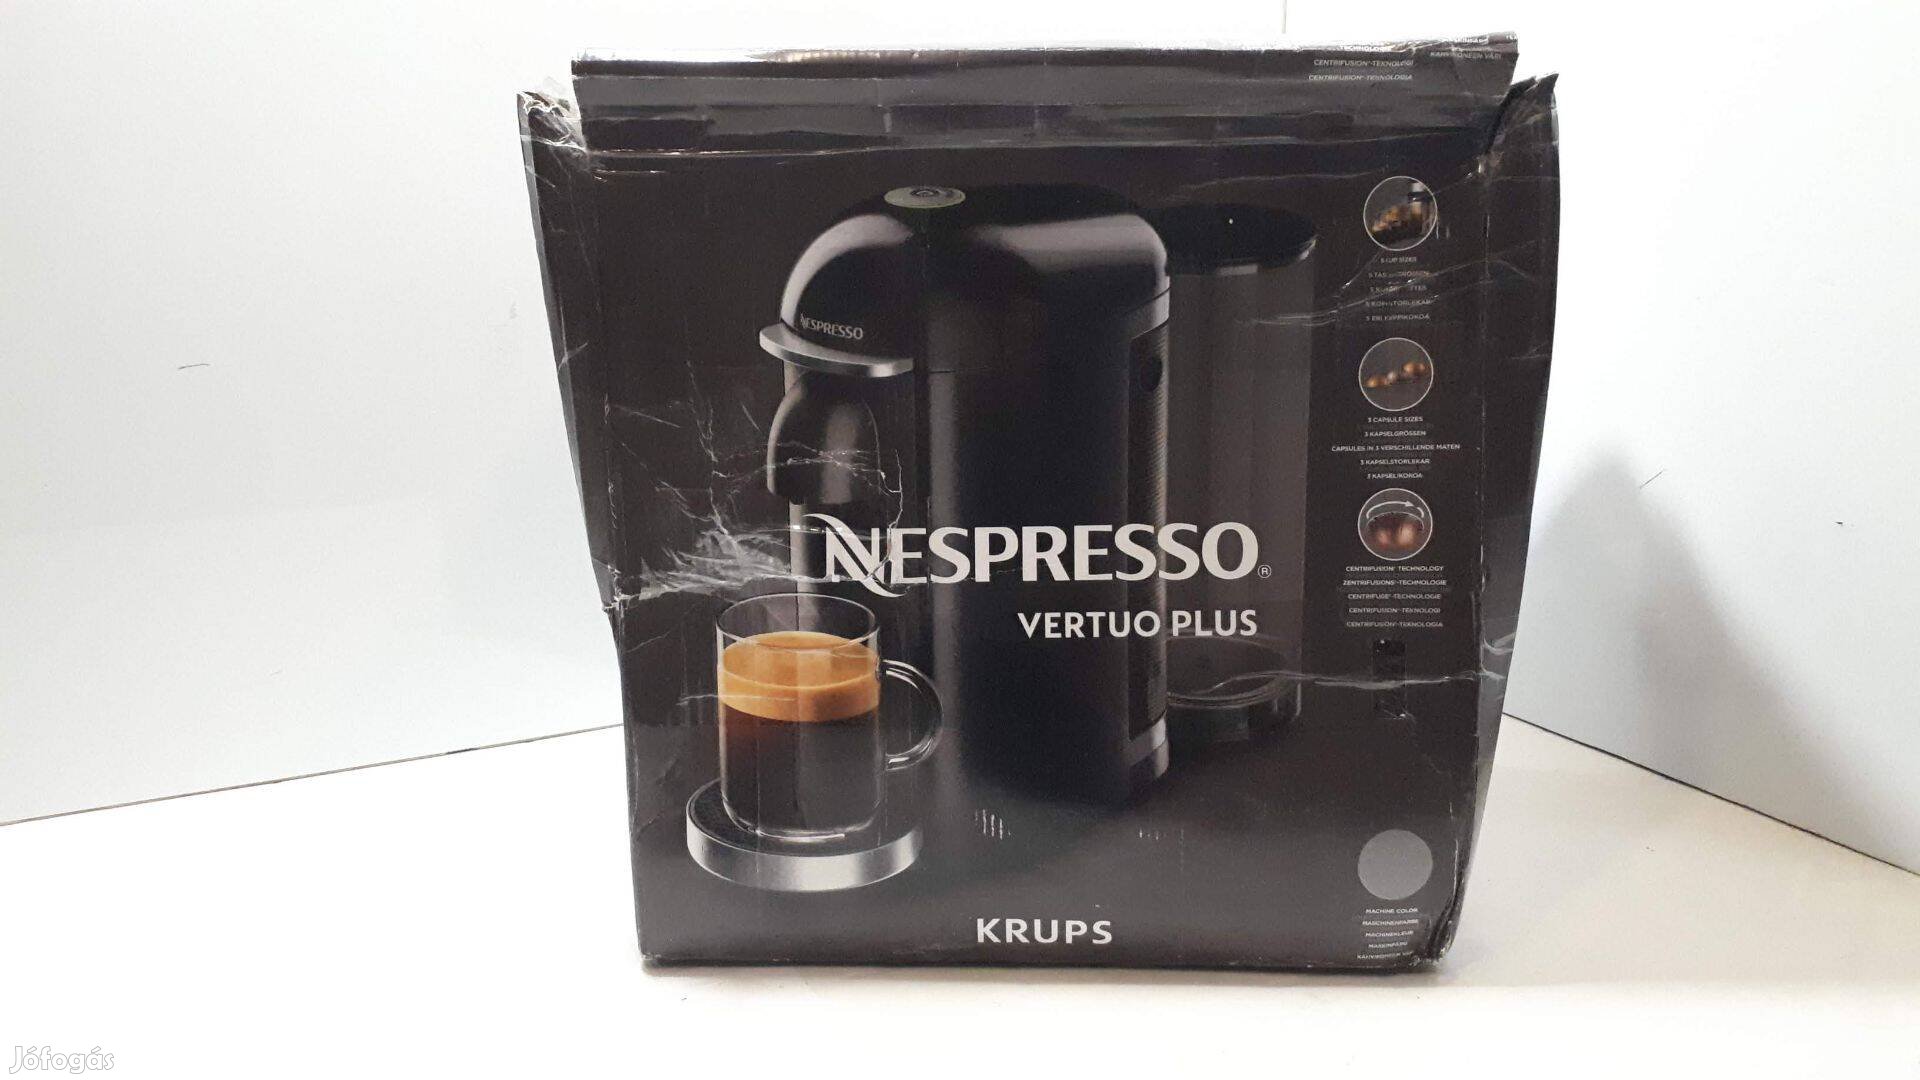 Krups Nespresso Vertuo Plus XN900 Kapszulás kávéfőző - Szürke, újszerű